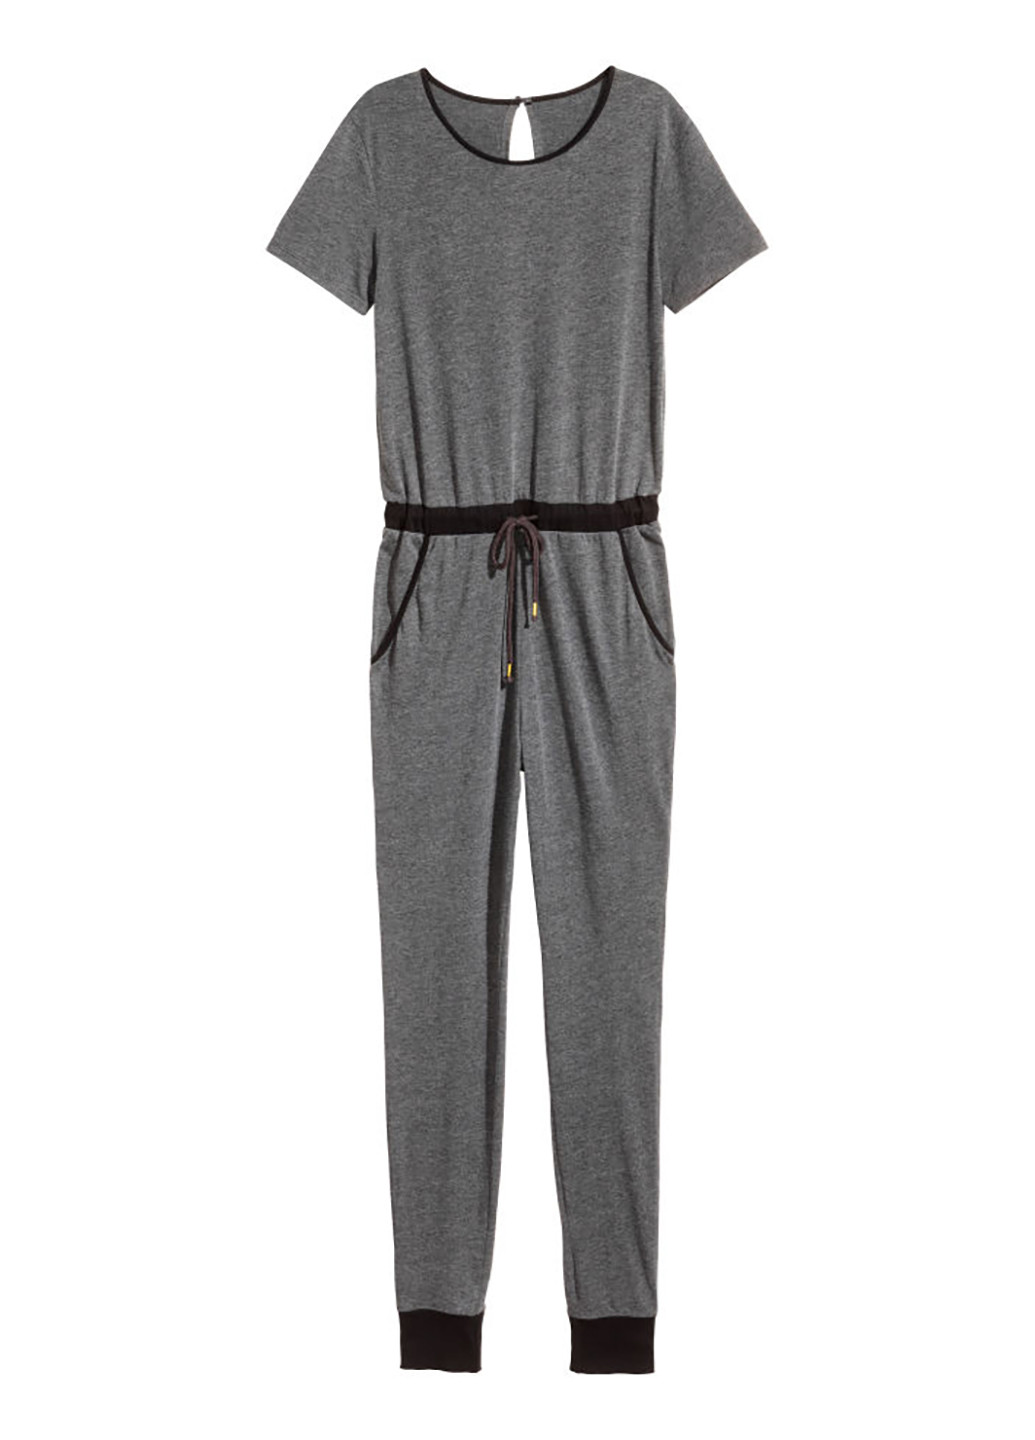 Комбинезон H&M комбинезон-брюки однотонный серый кэжуал хлопок